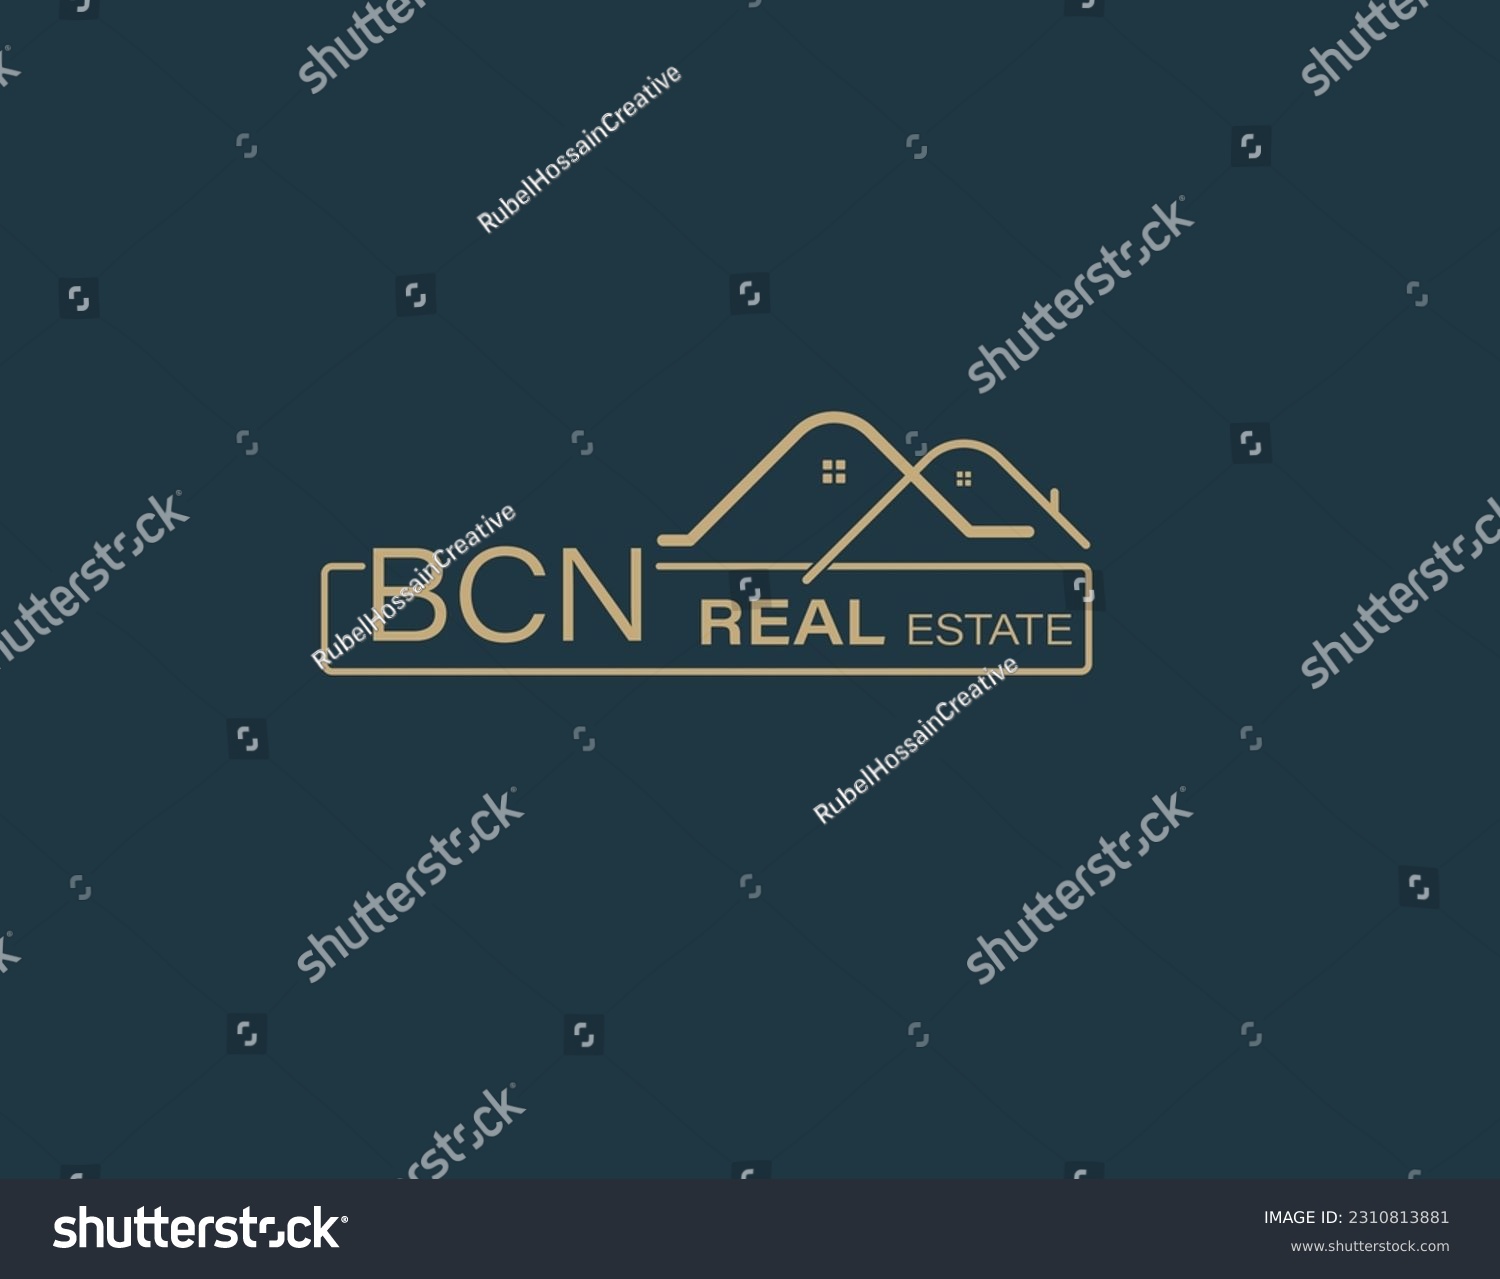 SVG of BCN Real Estate and Consultants Logo Design Vectors images. Luxury Real Estate Logo Design svg